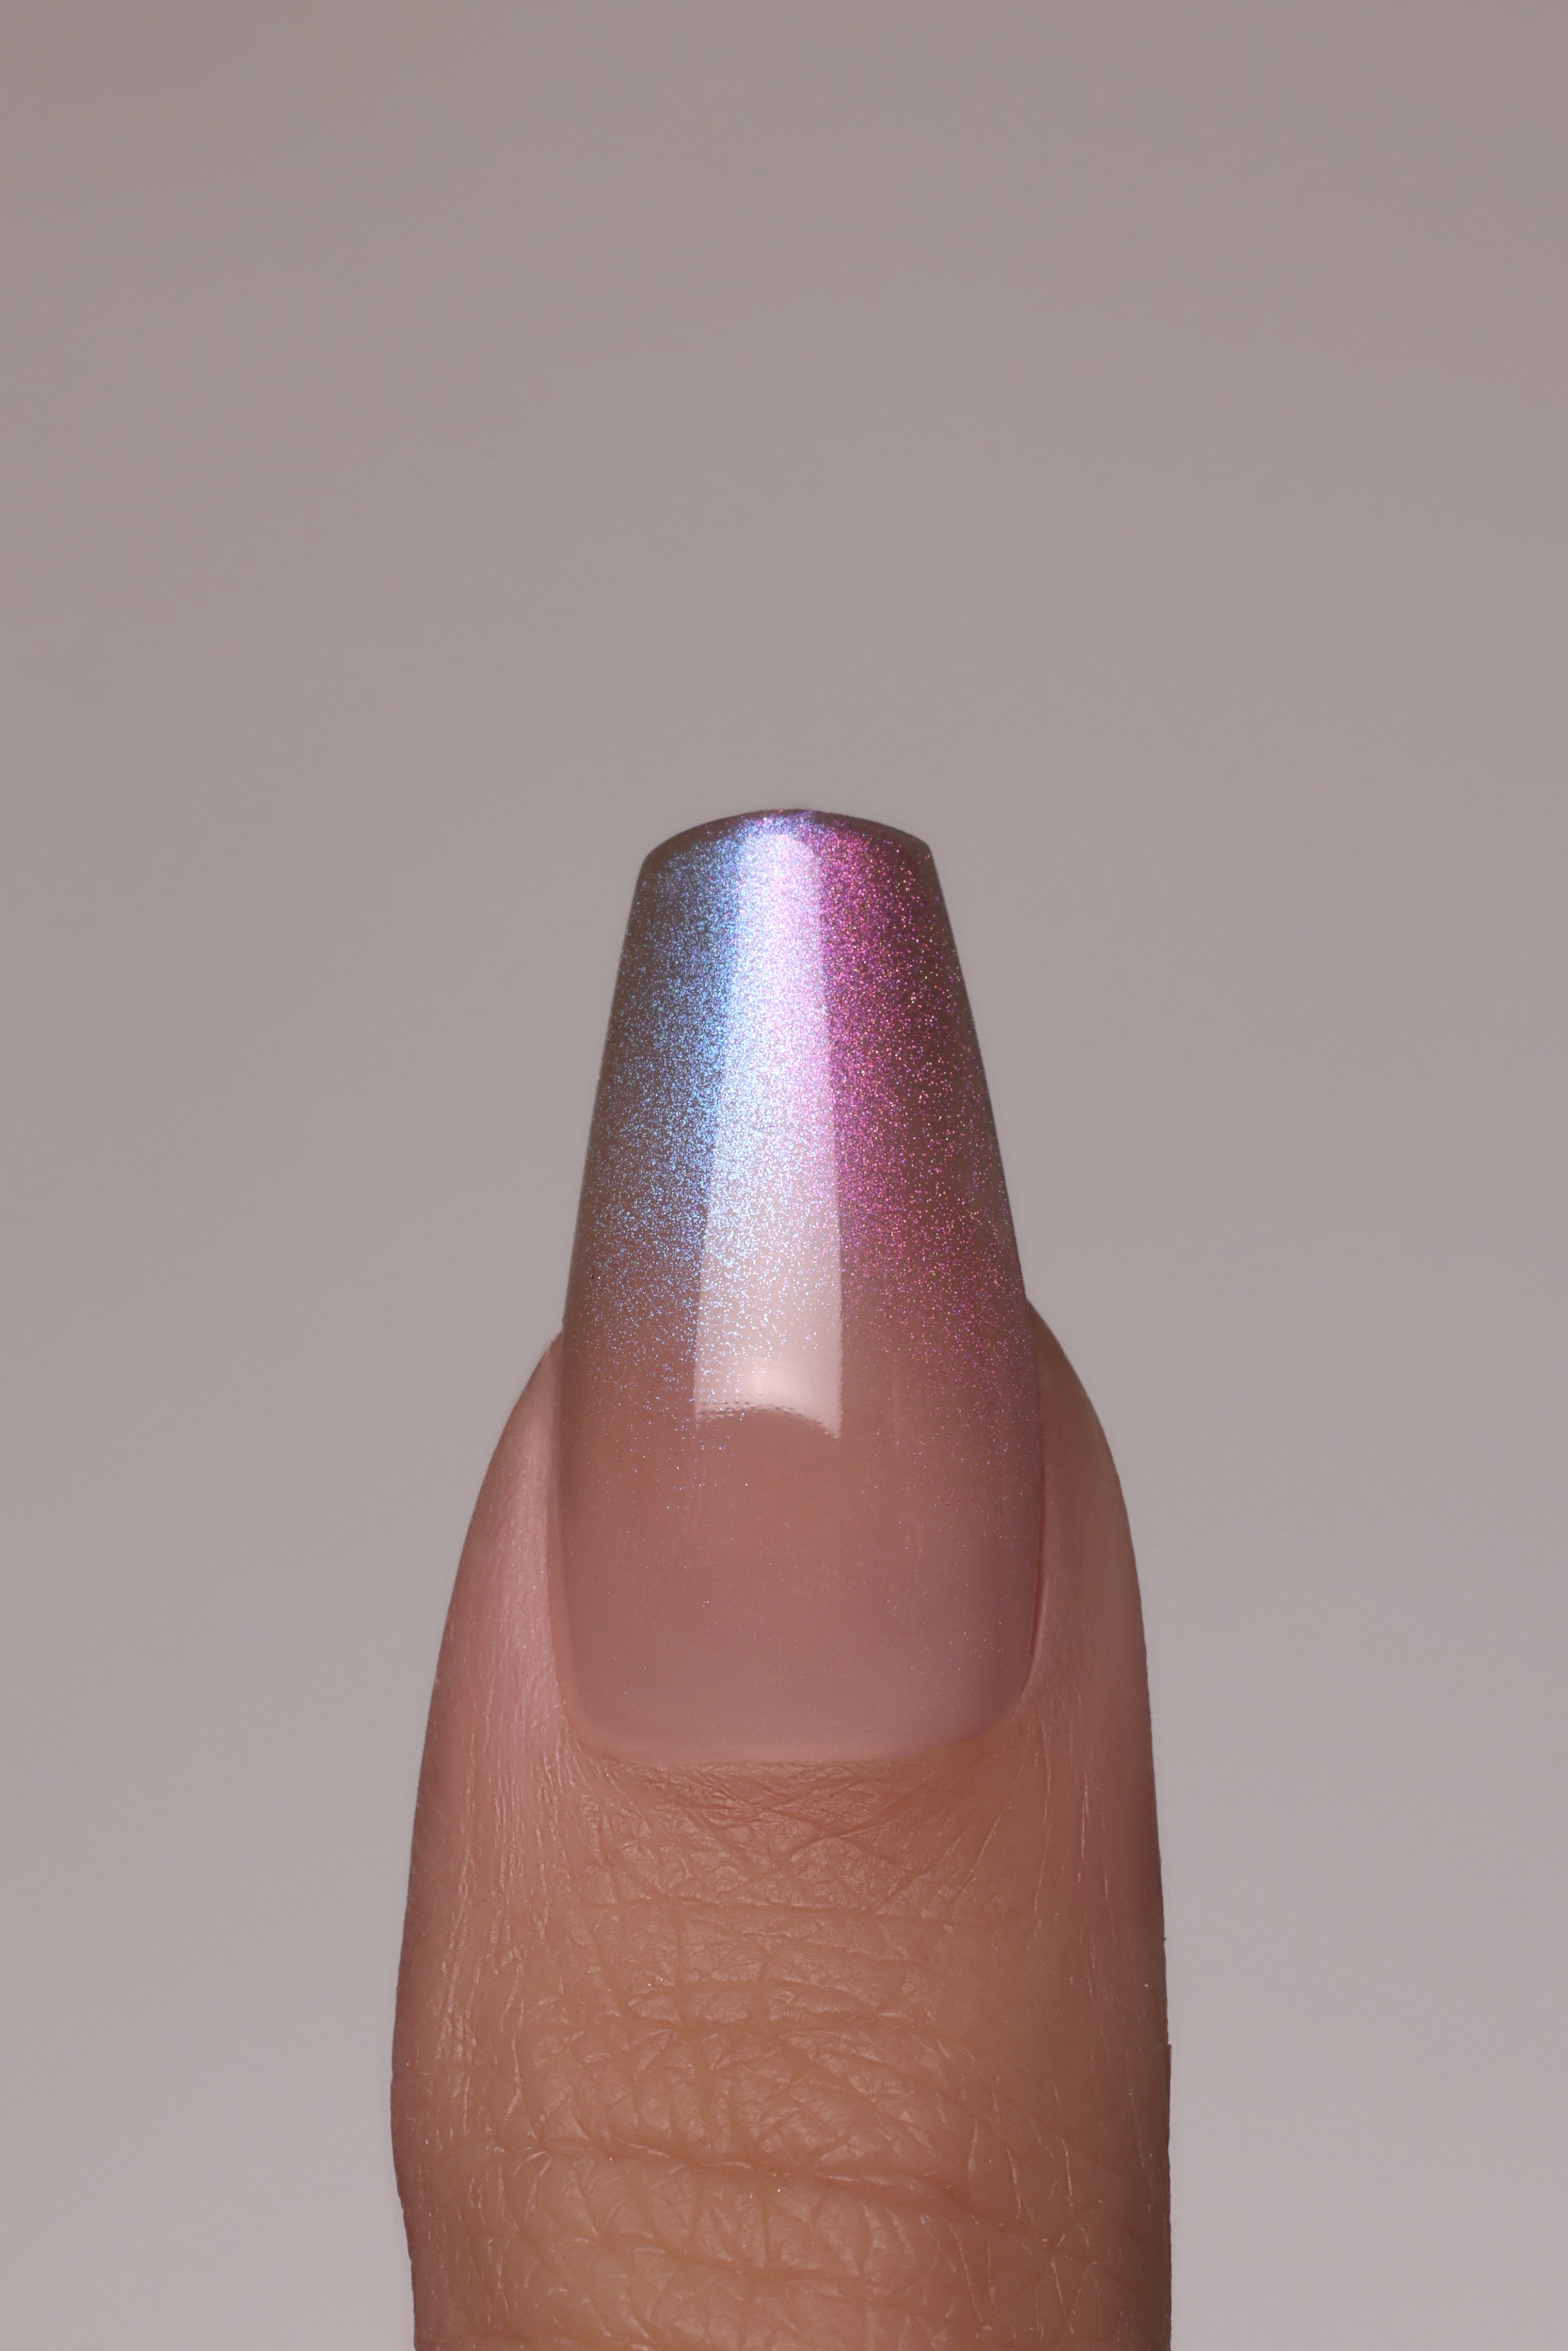 Ombré Star ACRYLISH (extra-long) artificial nails (NEW)